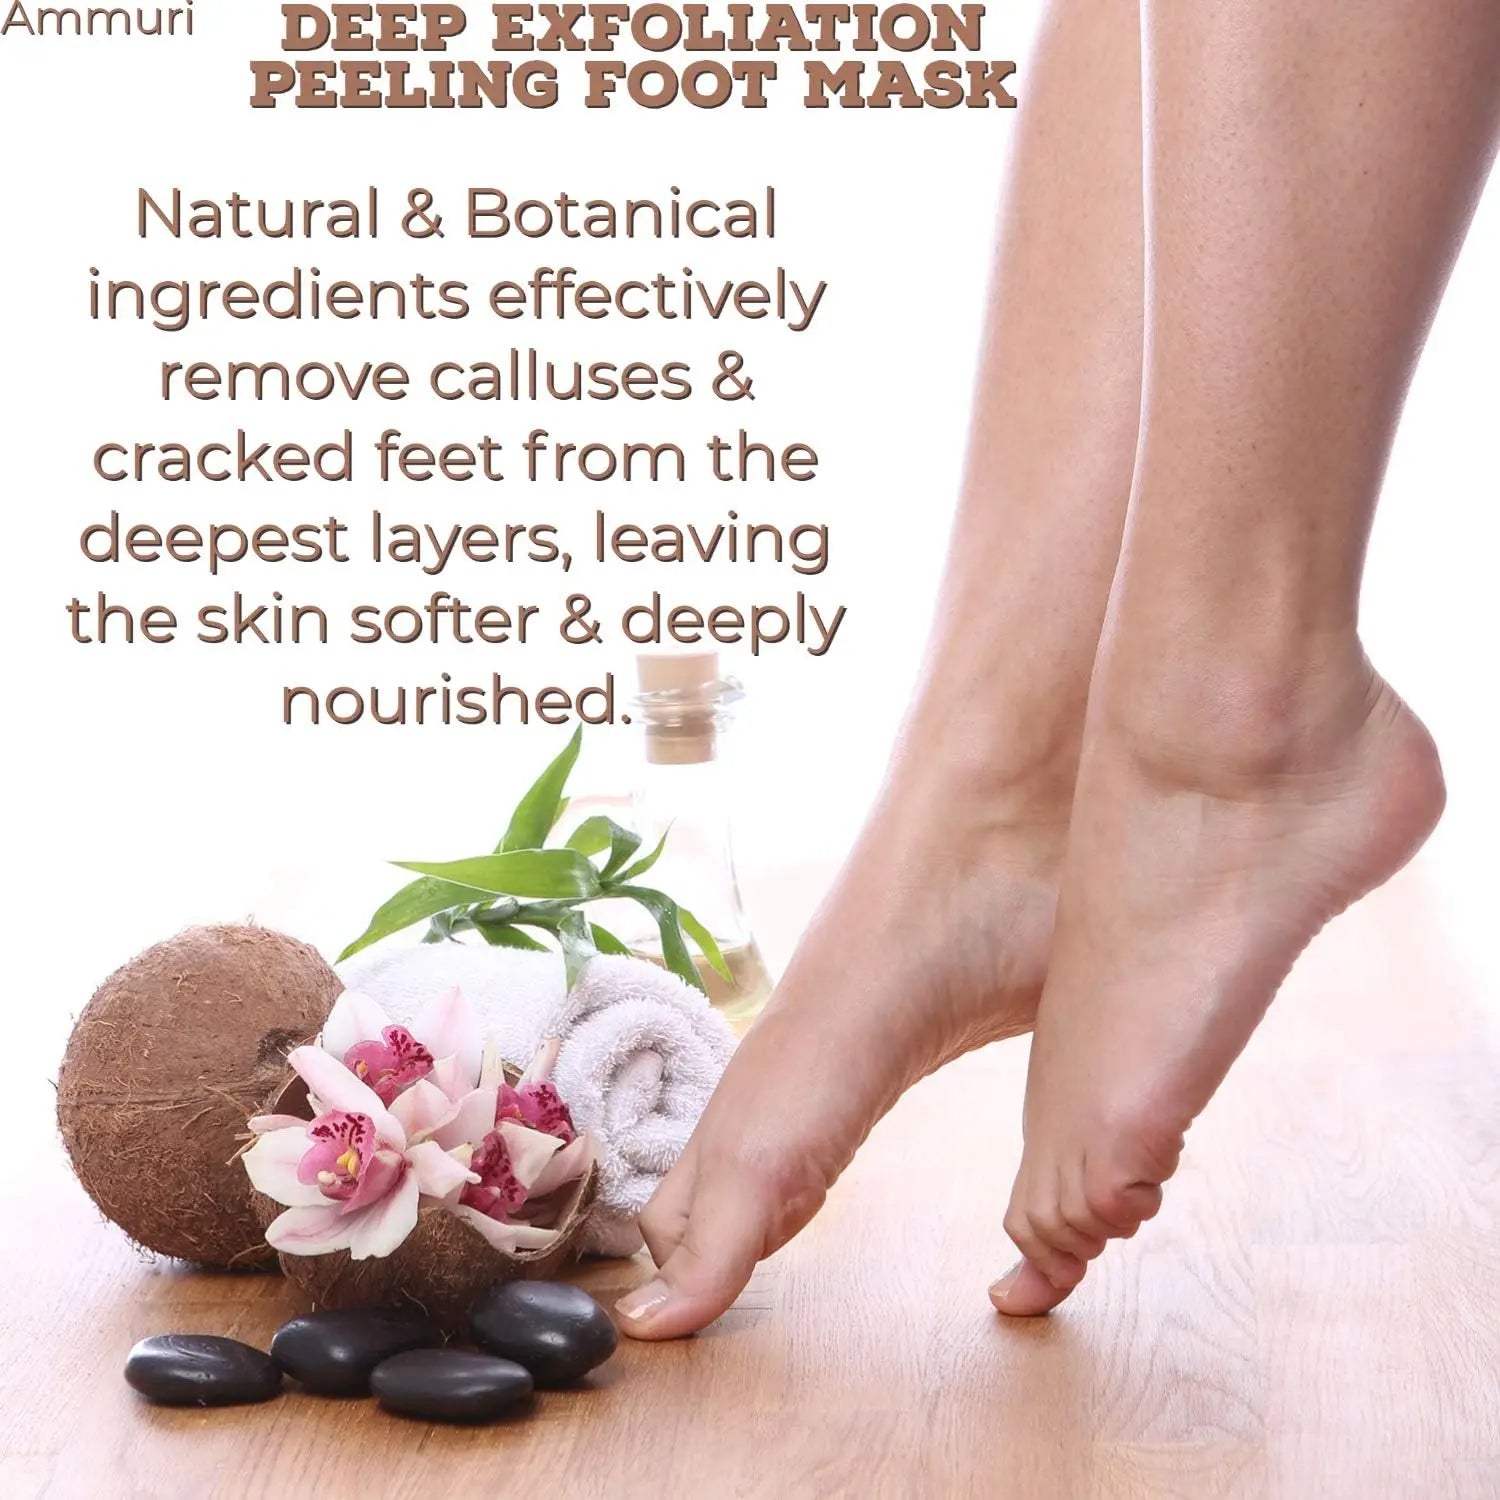 Deep Exfoliating Peeling Foot Mask - Ammuri Skincare